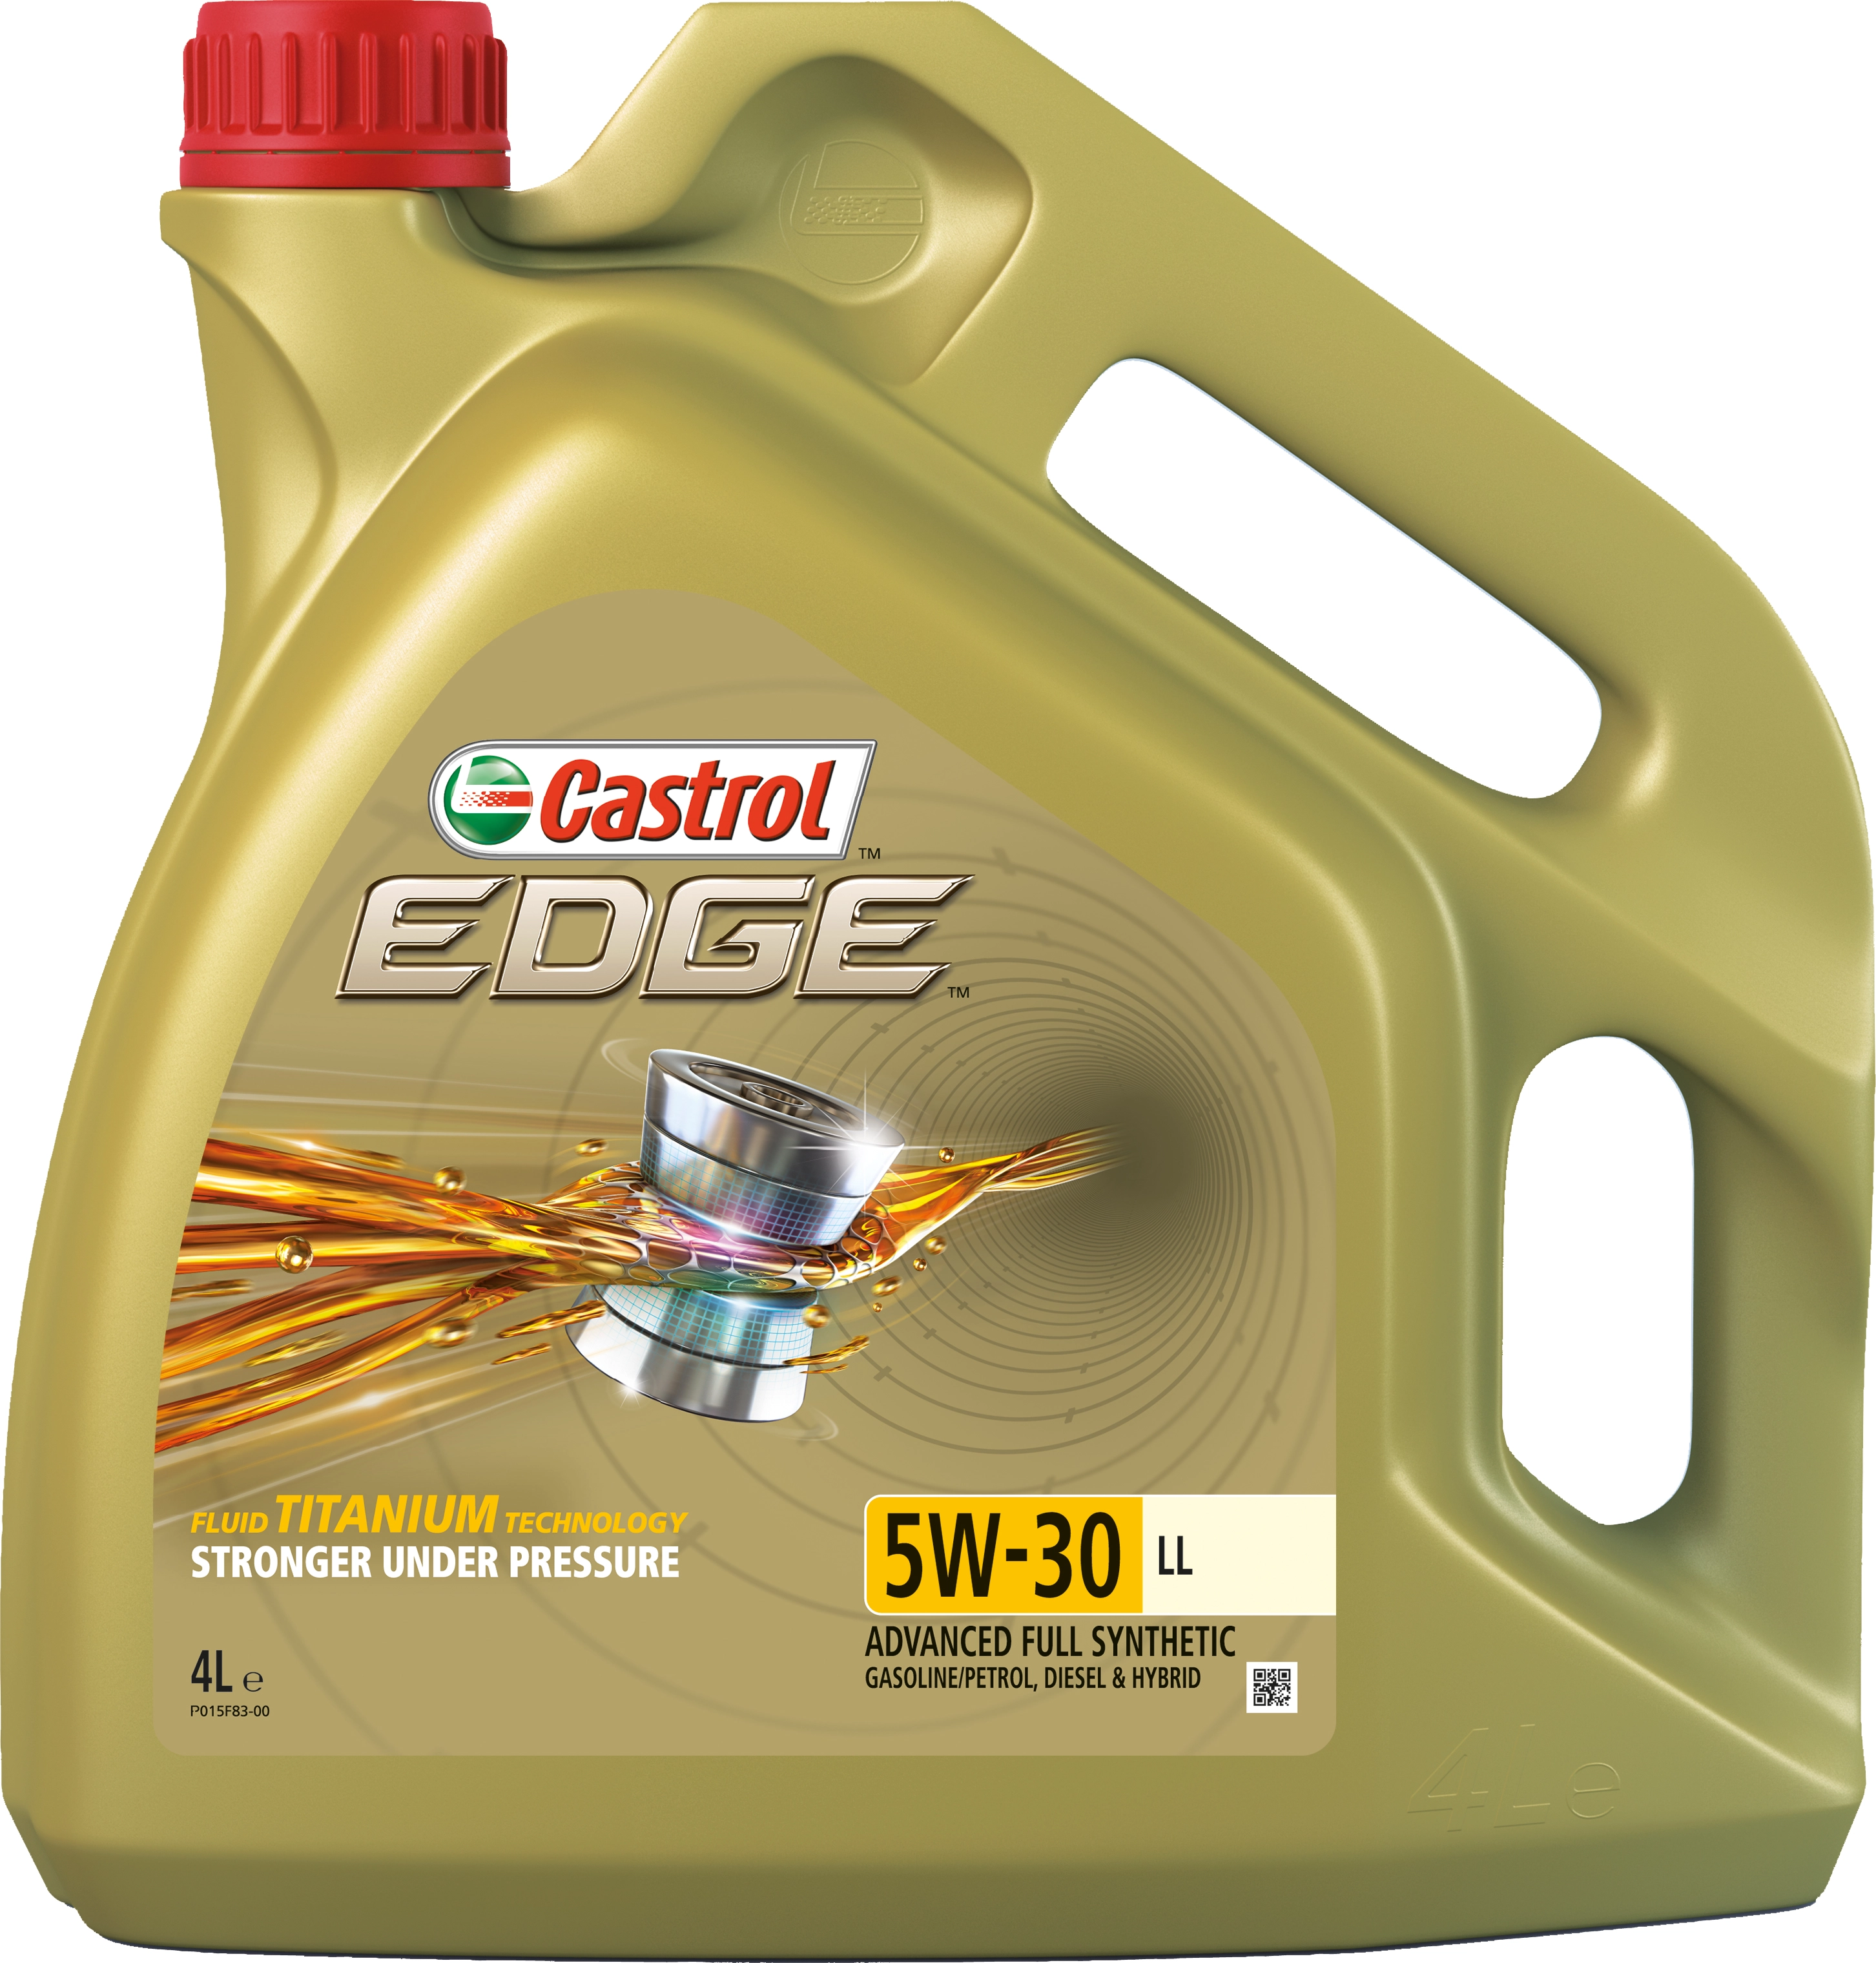 Cartec Motorenöl Longlife 5W-30 5 l kaufen bei OBI